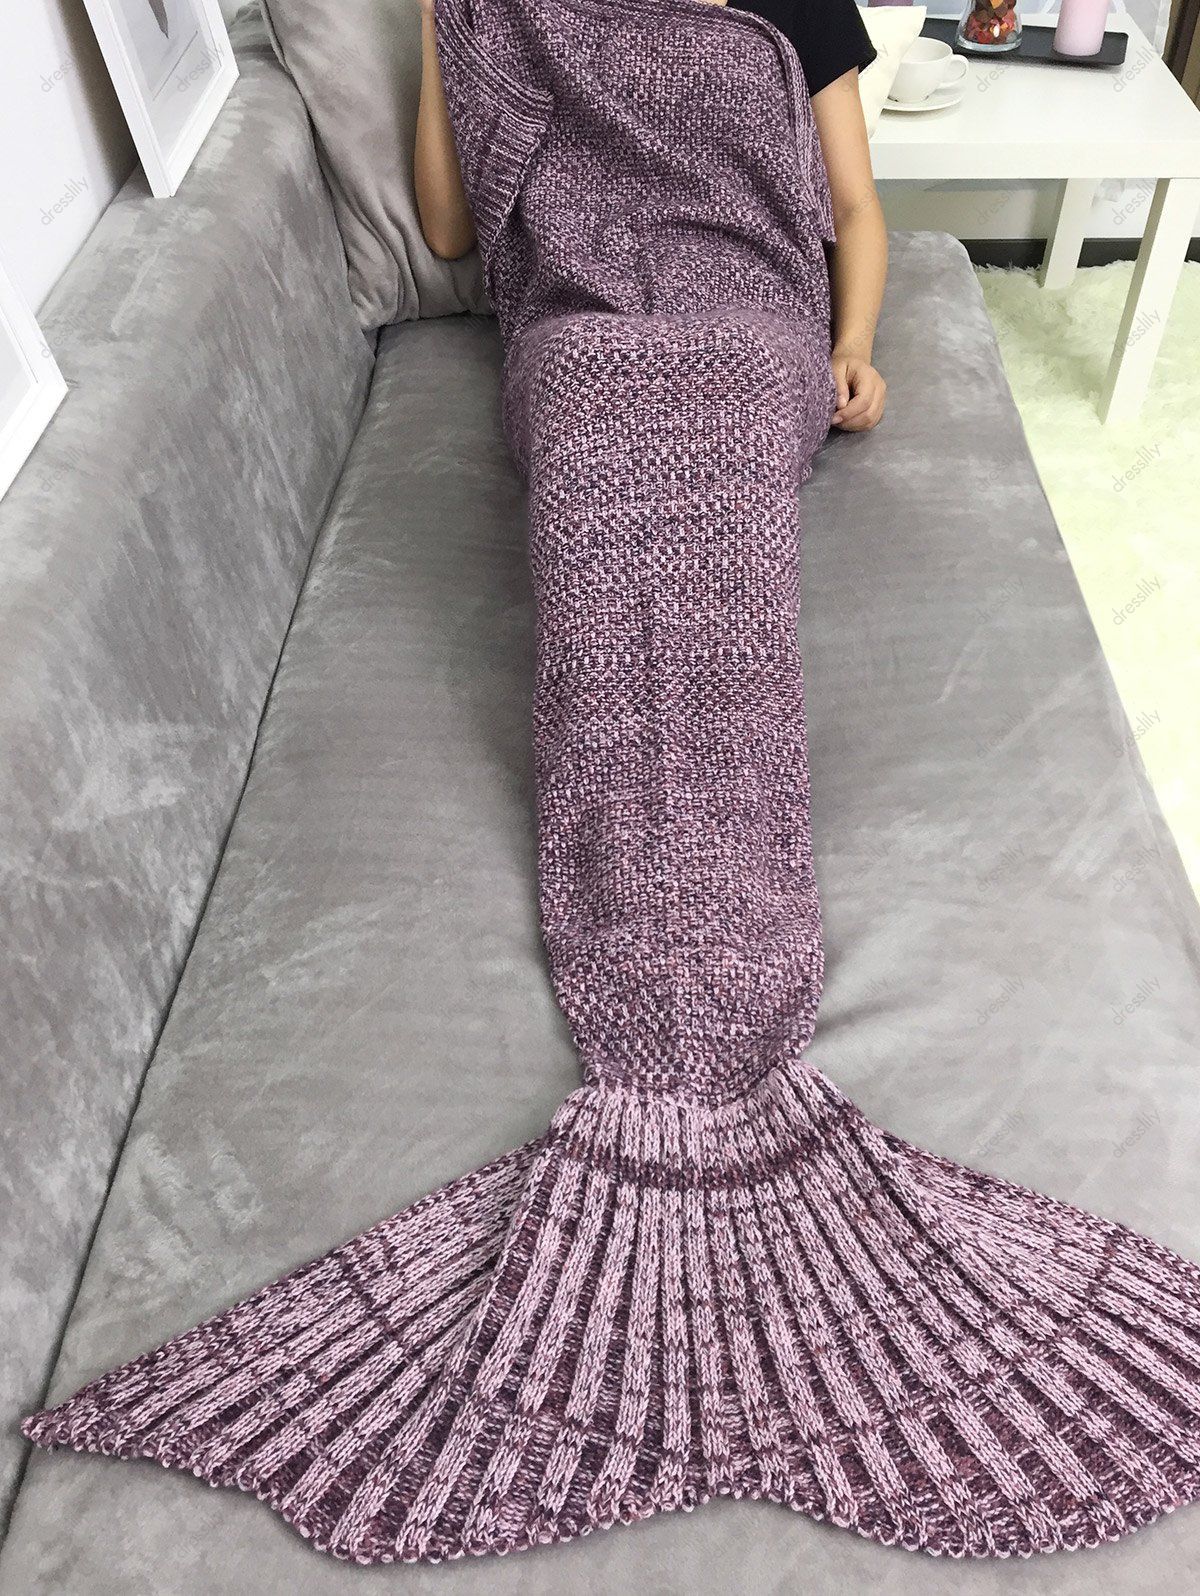 [63% OFF] 2021 Handmade Knitting Sleeping Bag Sofa Wrap Mermaid Tail Blanket In FLAX | DressLily